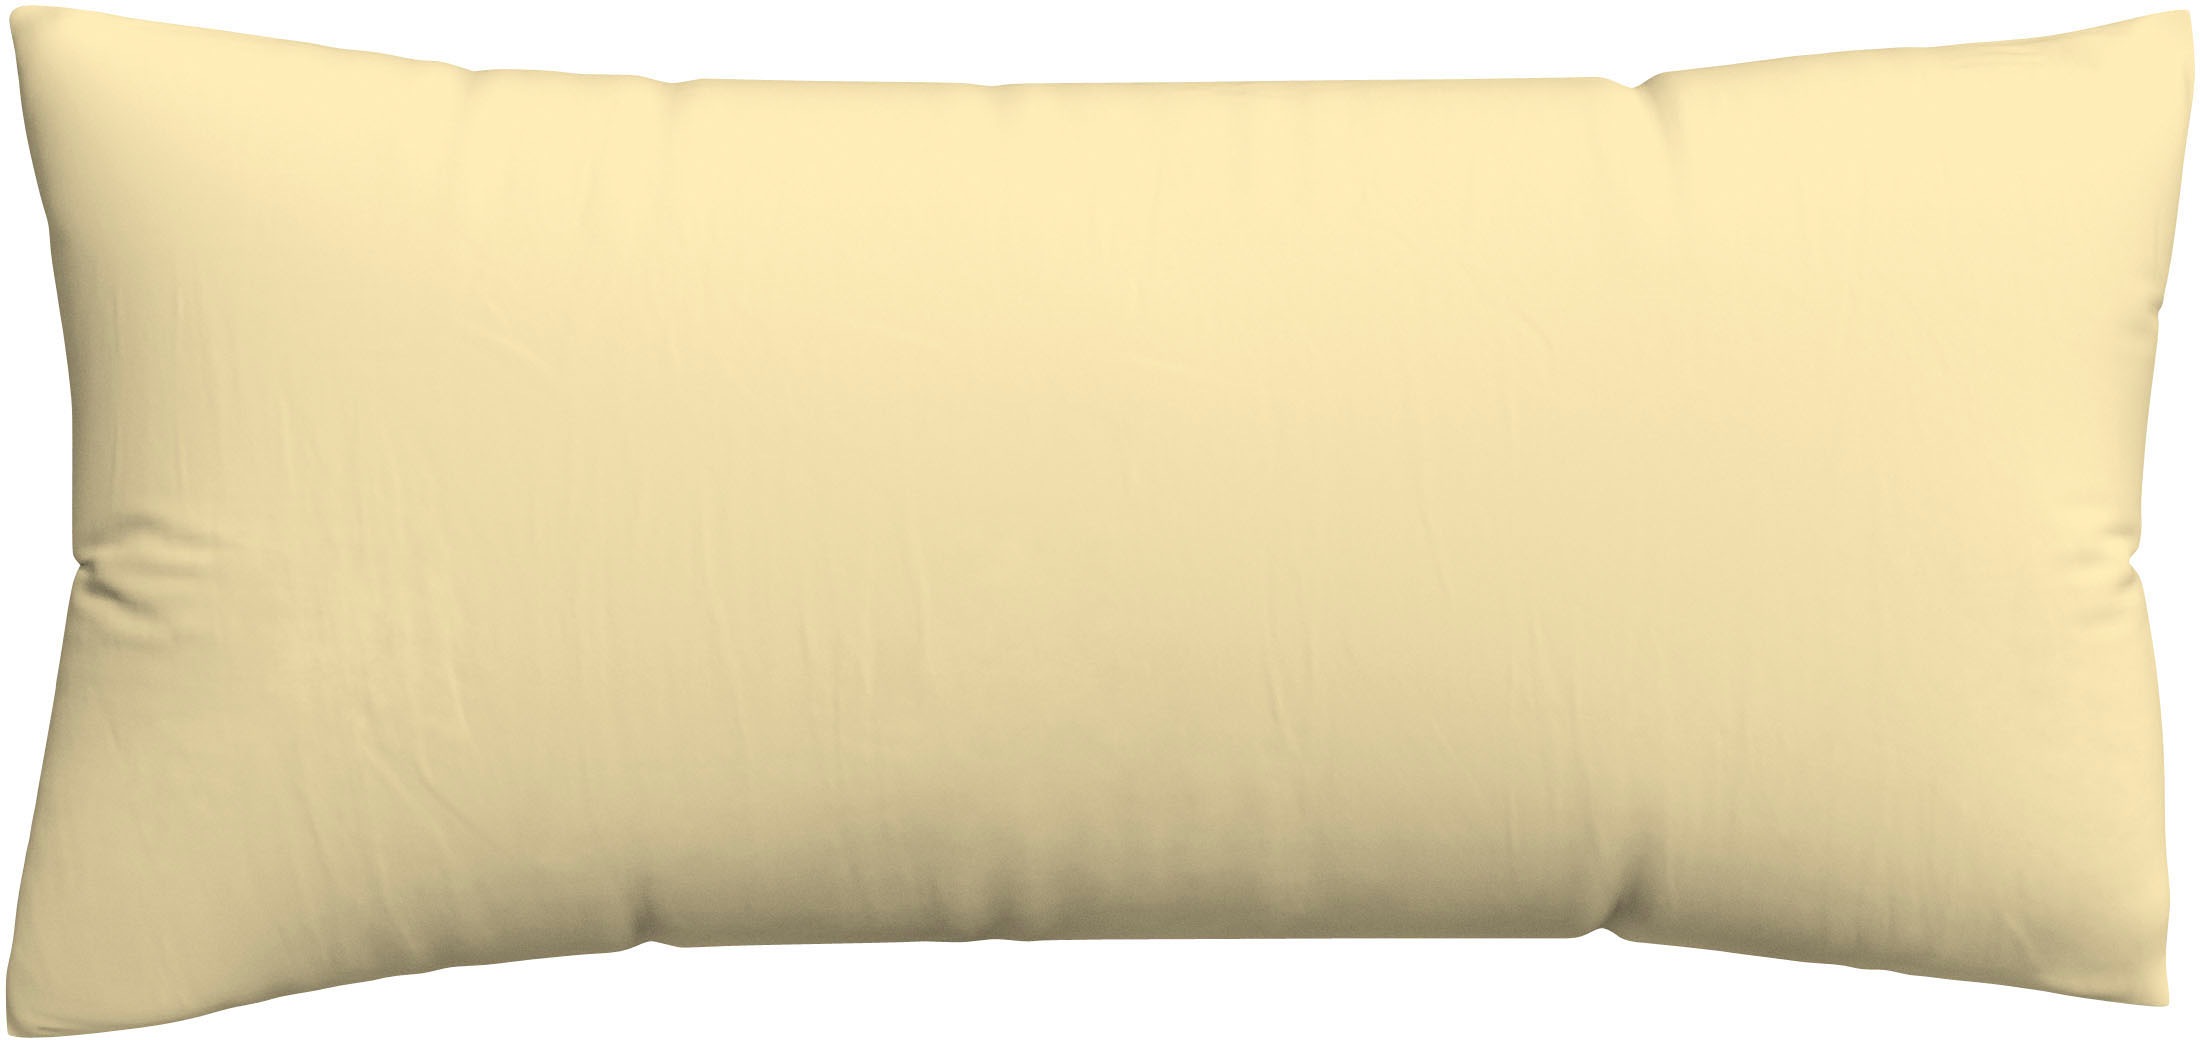 Schlafgut Kissenbezug »Woven Satin aus Mako-Baumwolle, langlebig, pflegeleicht, dicht gewebt«, (1 St.), Kissenhülle mit Reißverschluss, passender Bettbezug erhältlich